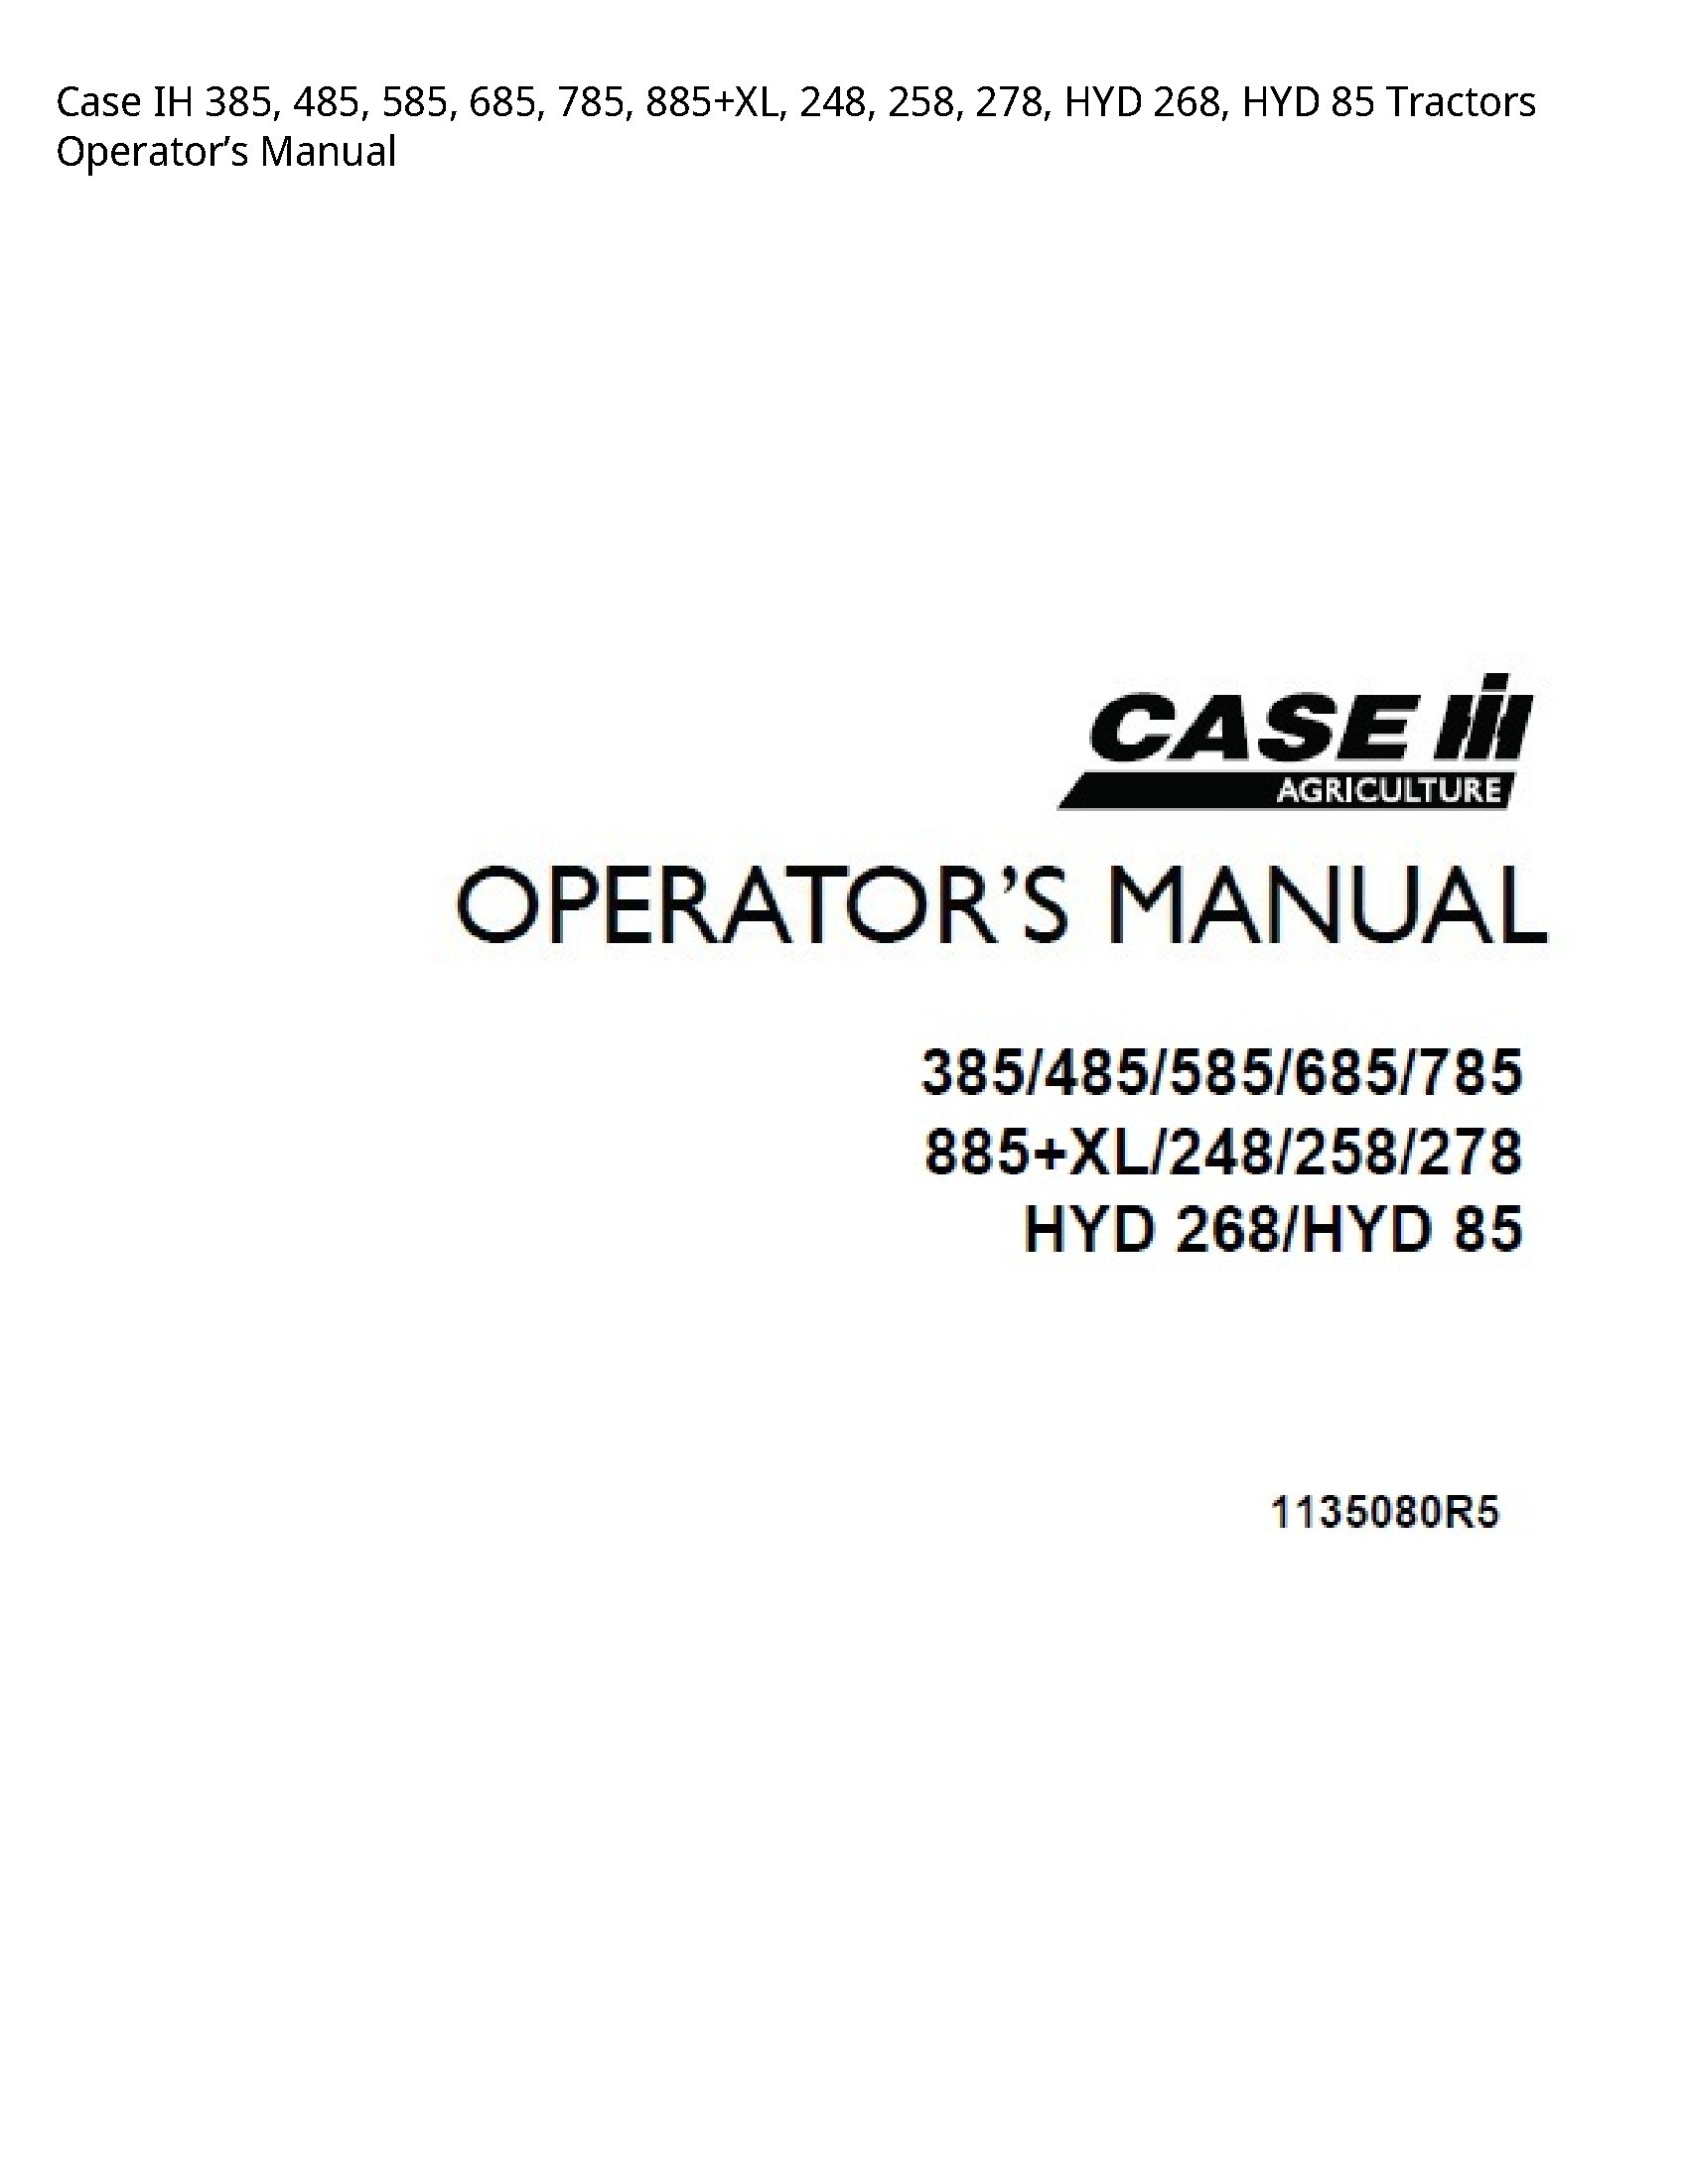 Case/Case IH 385 IH HYD HYD Tractors Operator’s manual